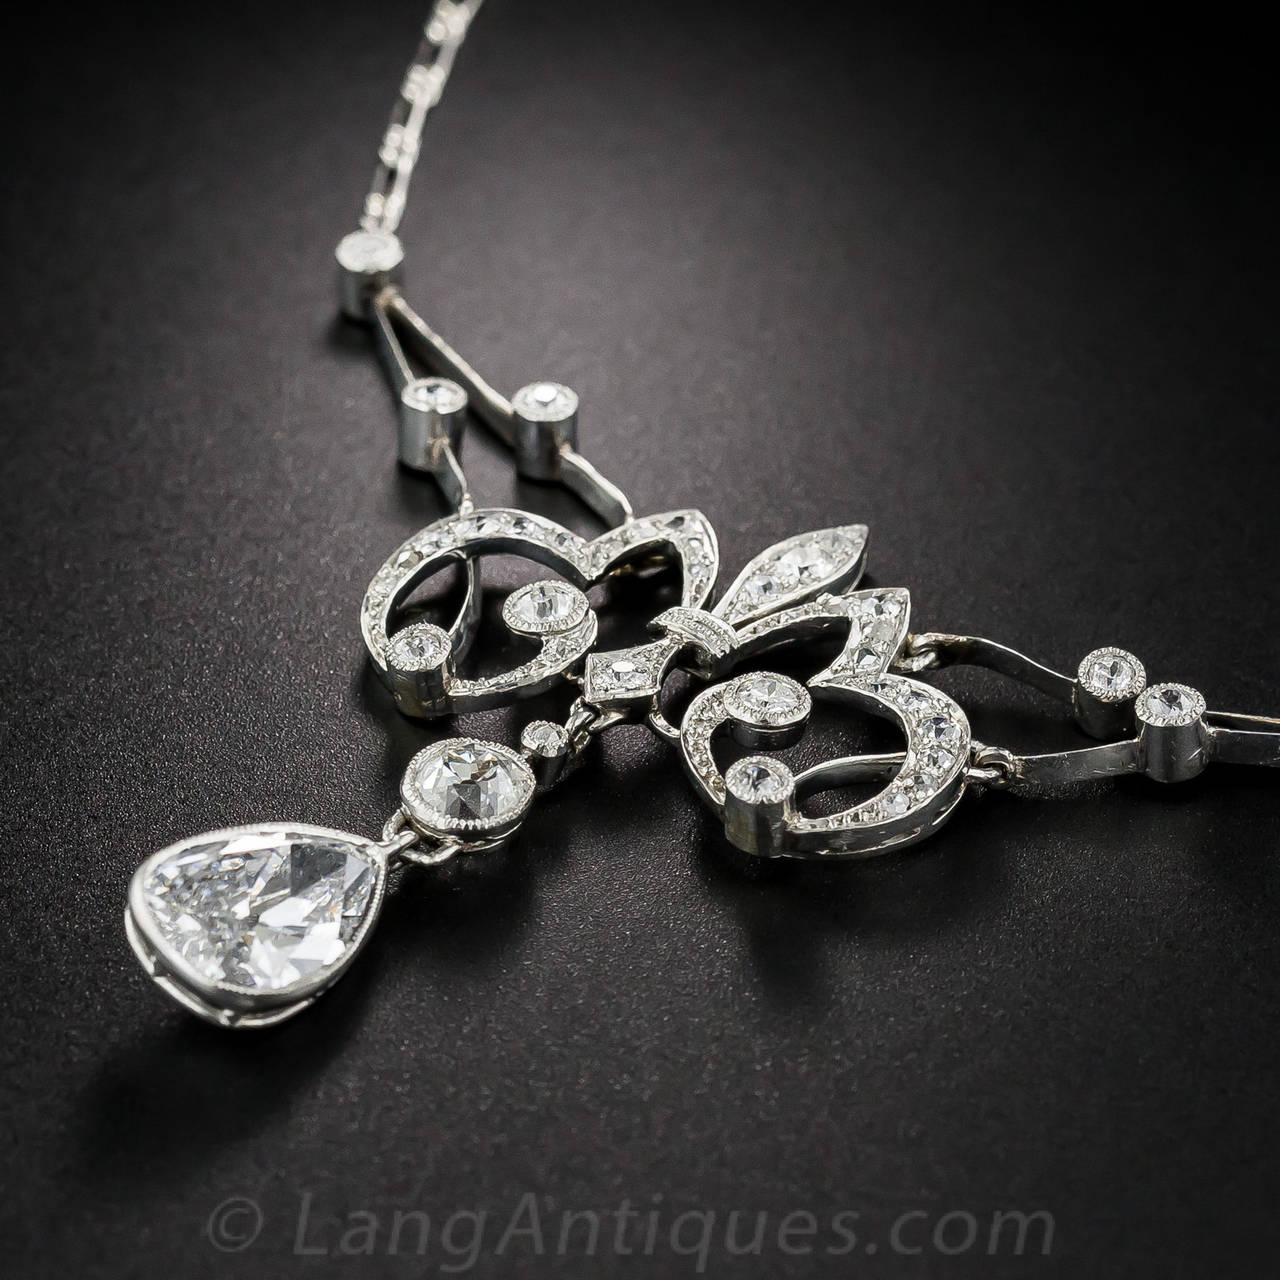 Belle Époque French Belle Epoque Necklace with 1.25 Carat Pear Shaped Diamond Drop For Sale